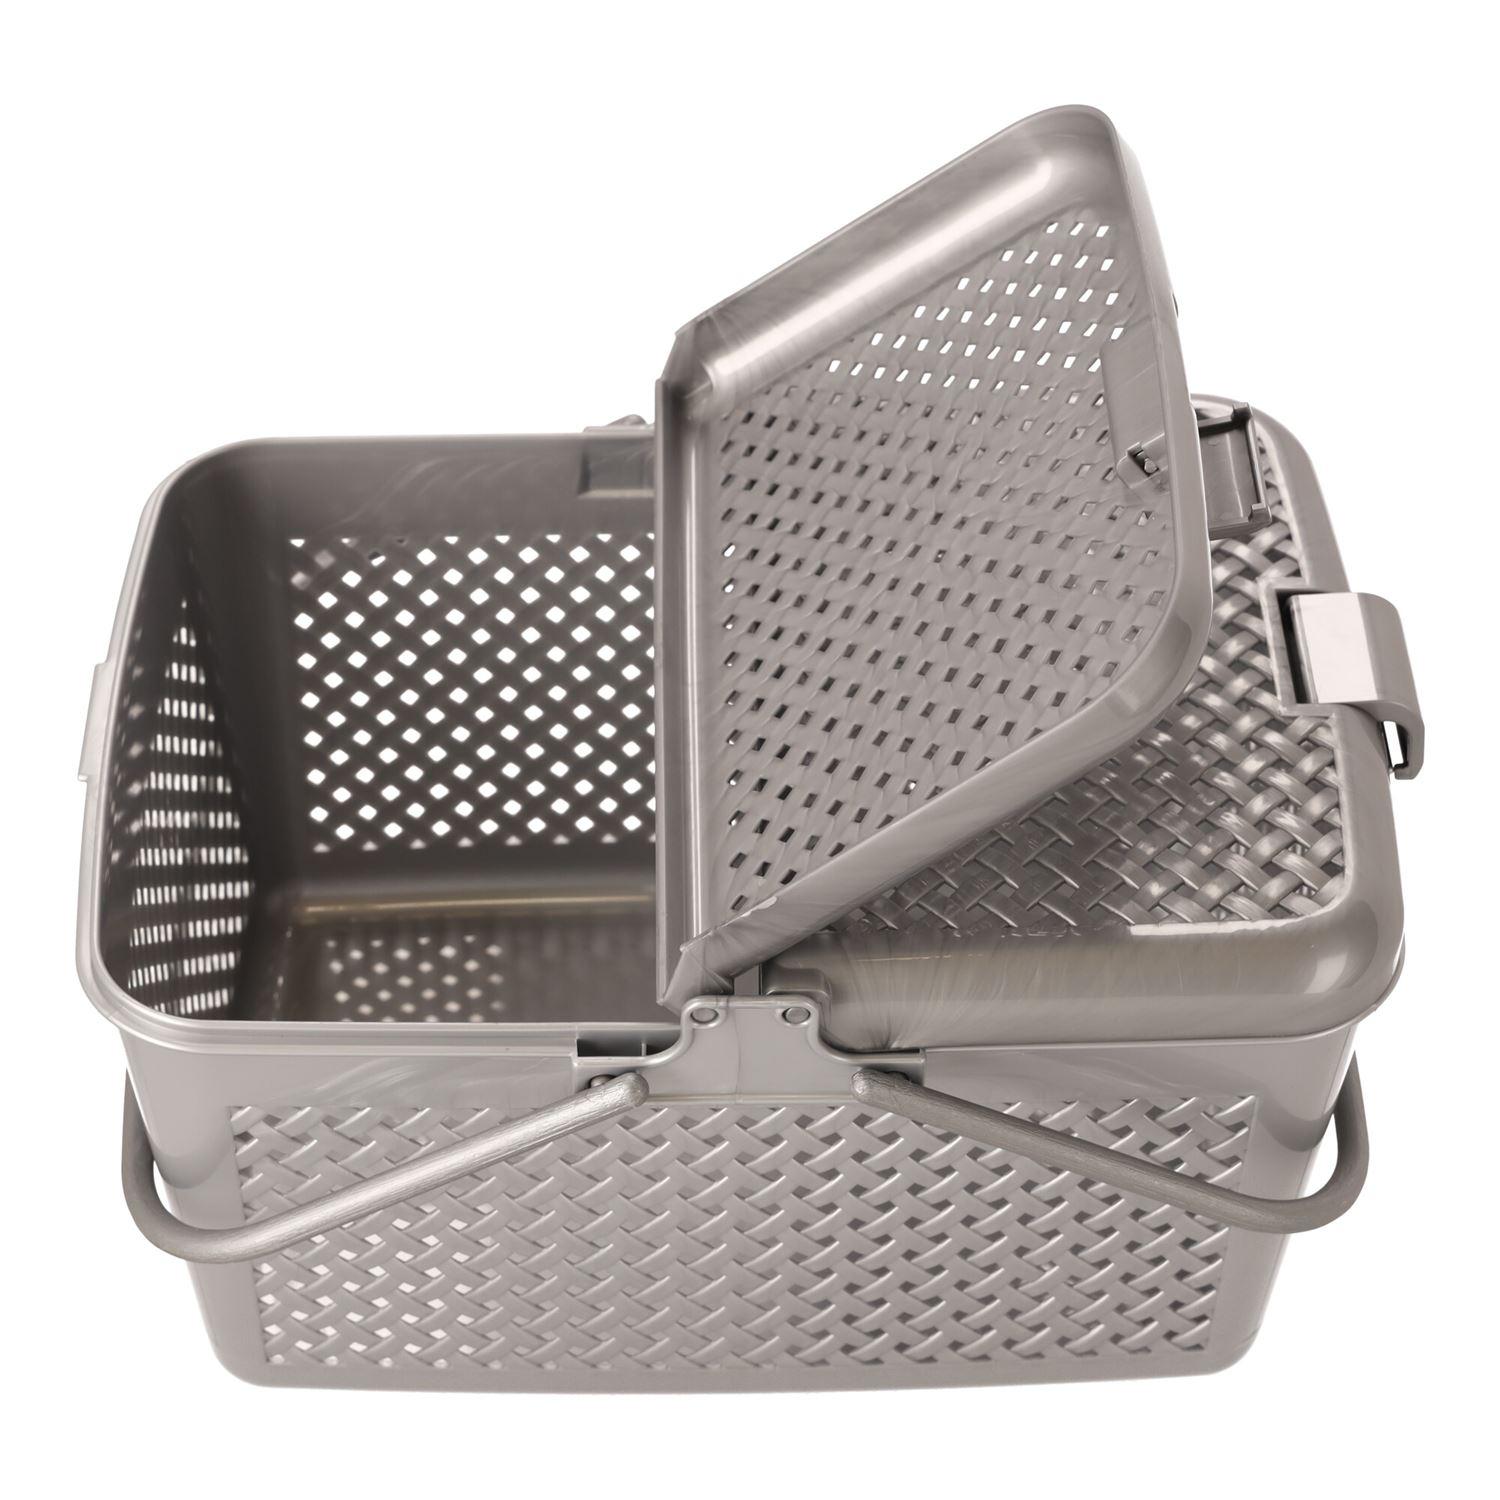 Rectangular picnic basket lockable grey, POLISH PRODUCT